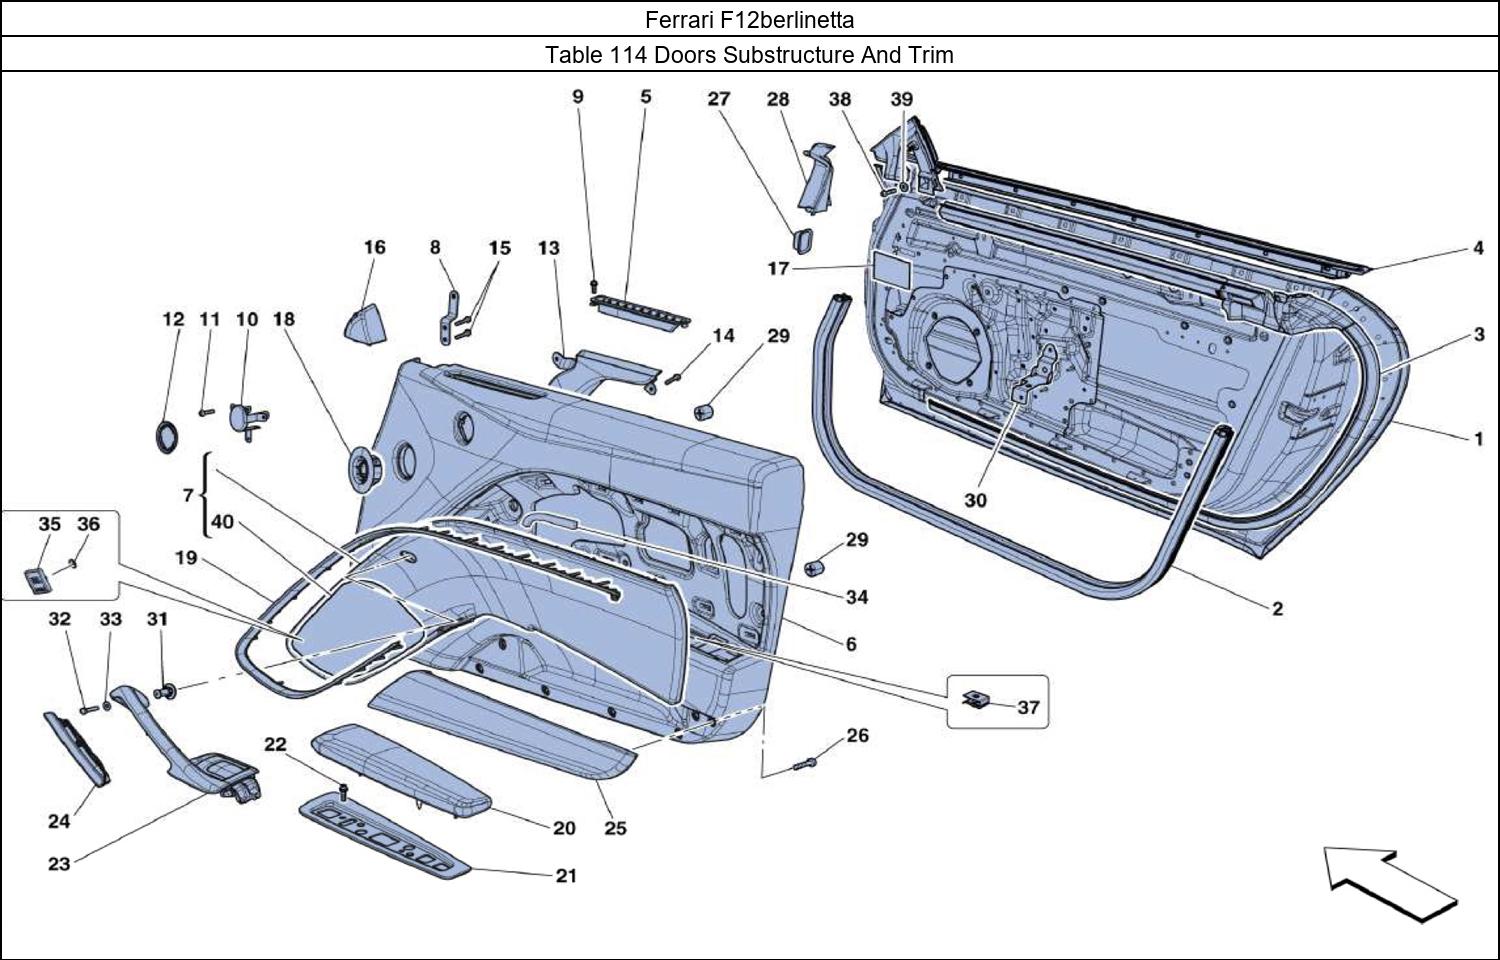 Ferrari Parts Ferrari F12berlinetta Table 114 Doors Substructure And Trim